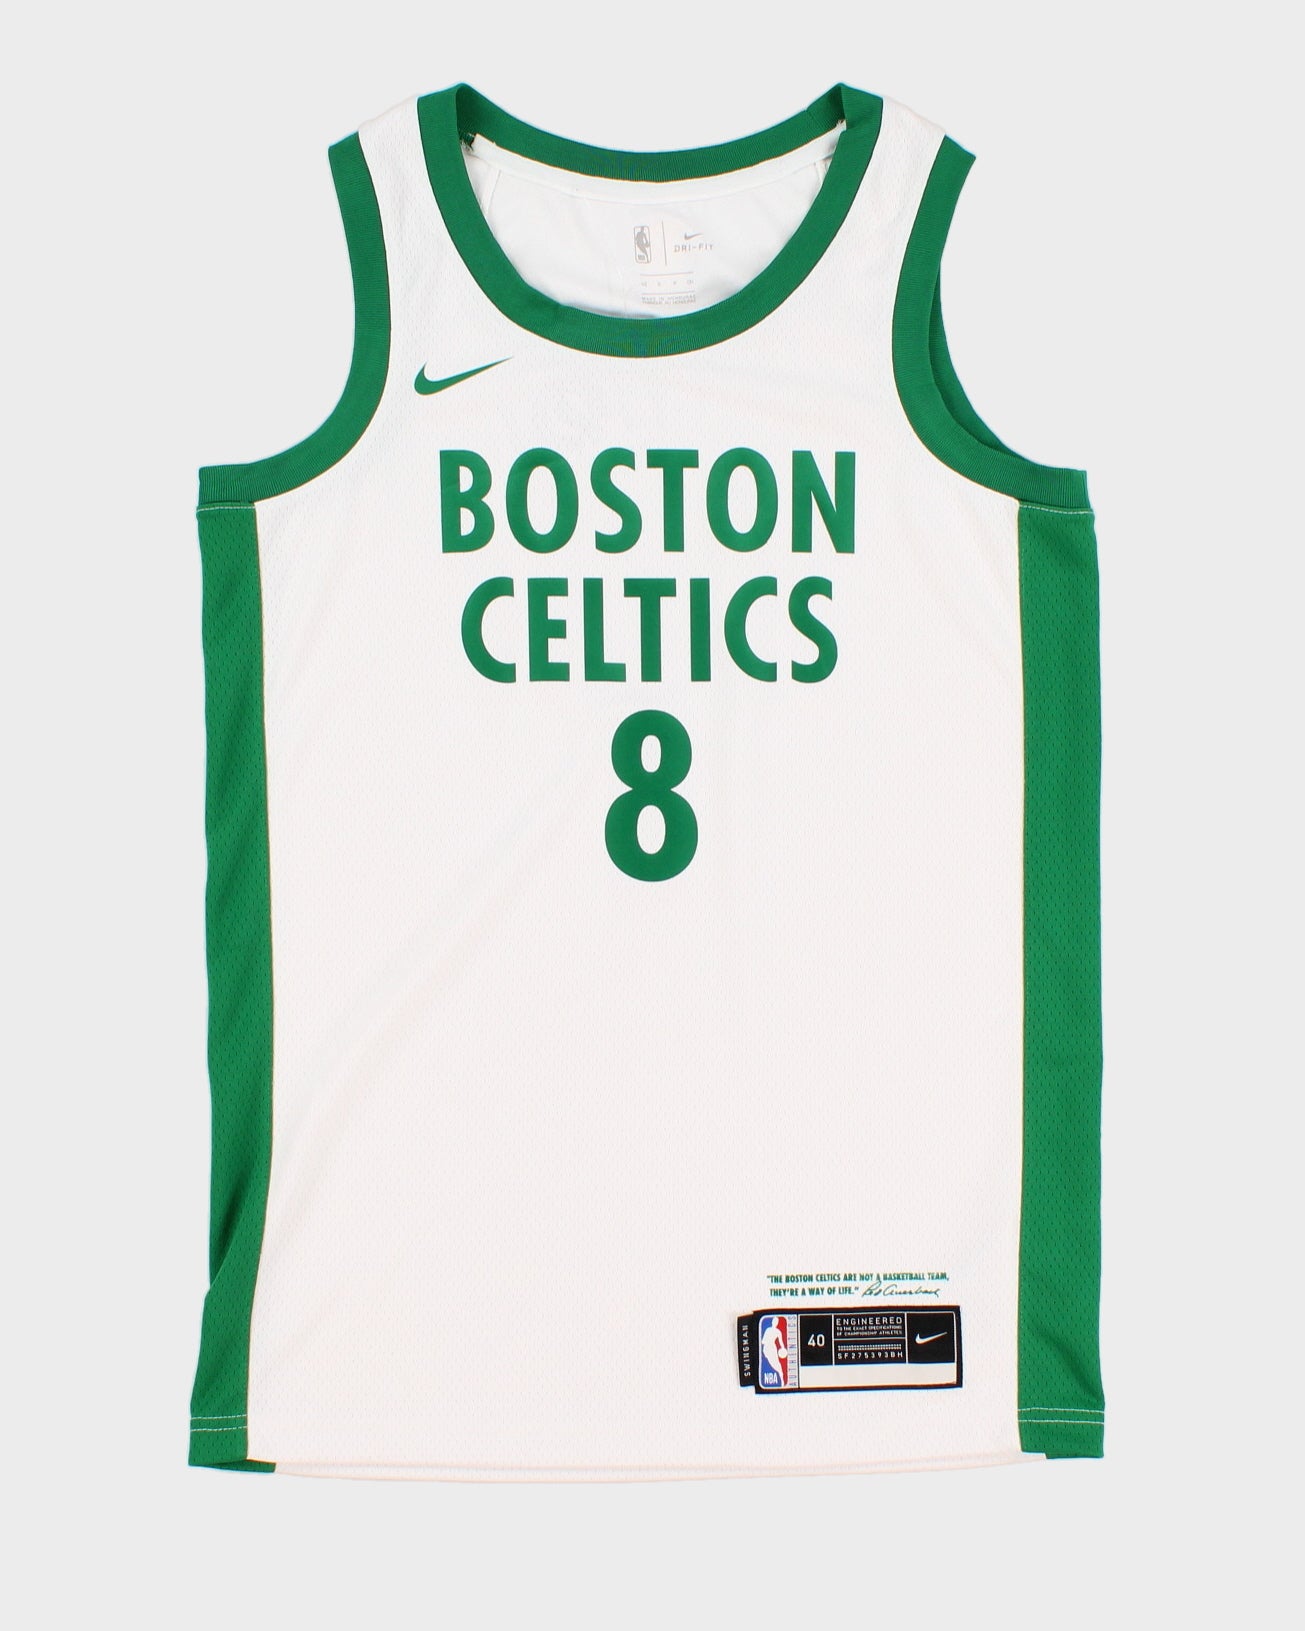 NBA x Boston Celtics Kemba Walker #8 Basketball Jersey - S